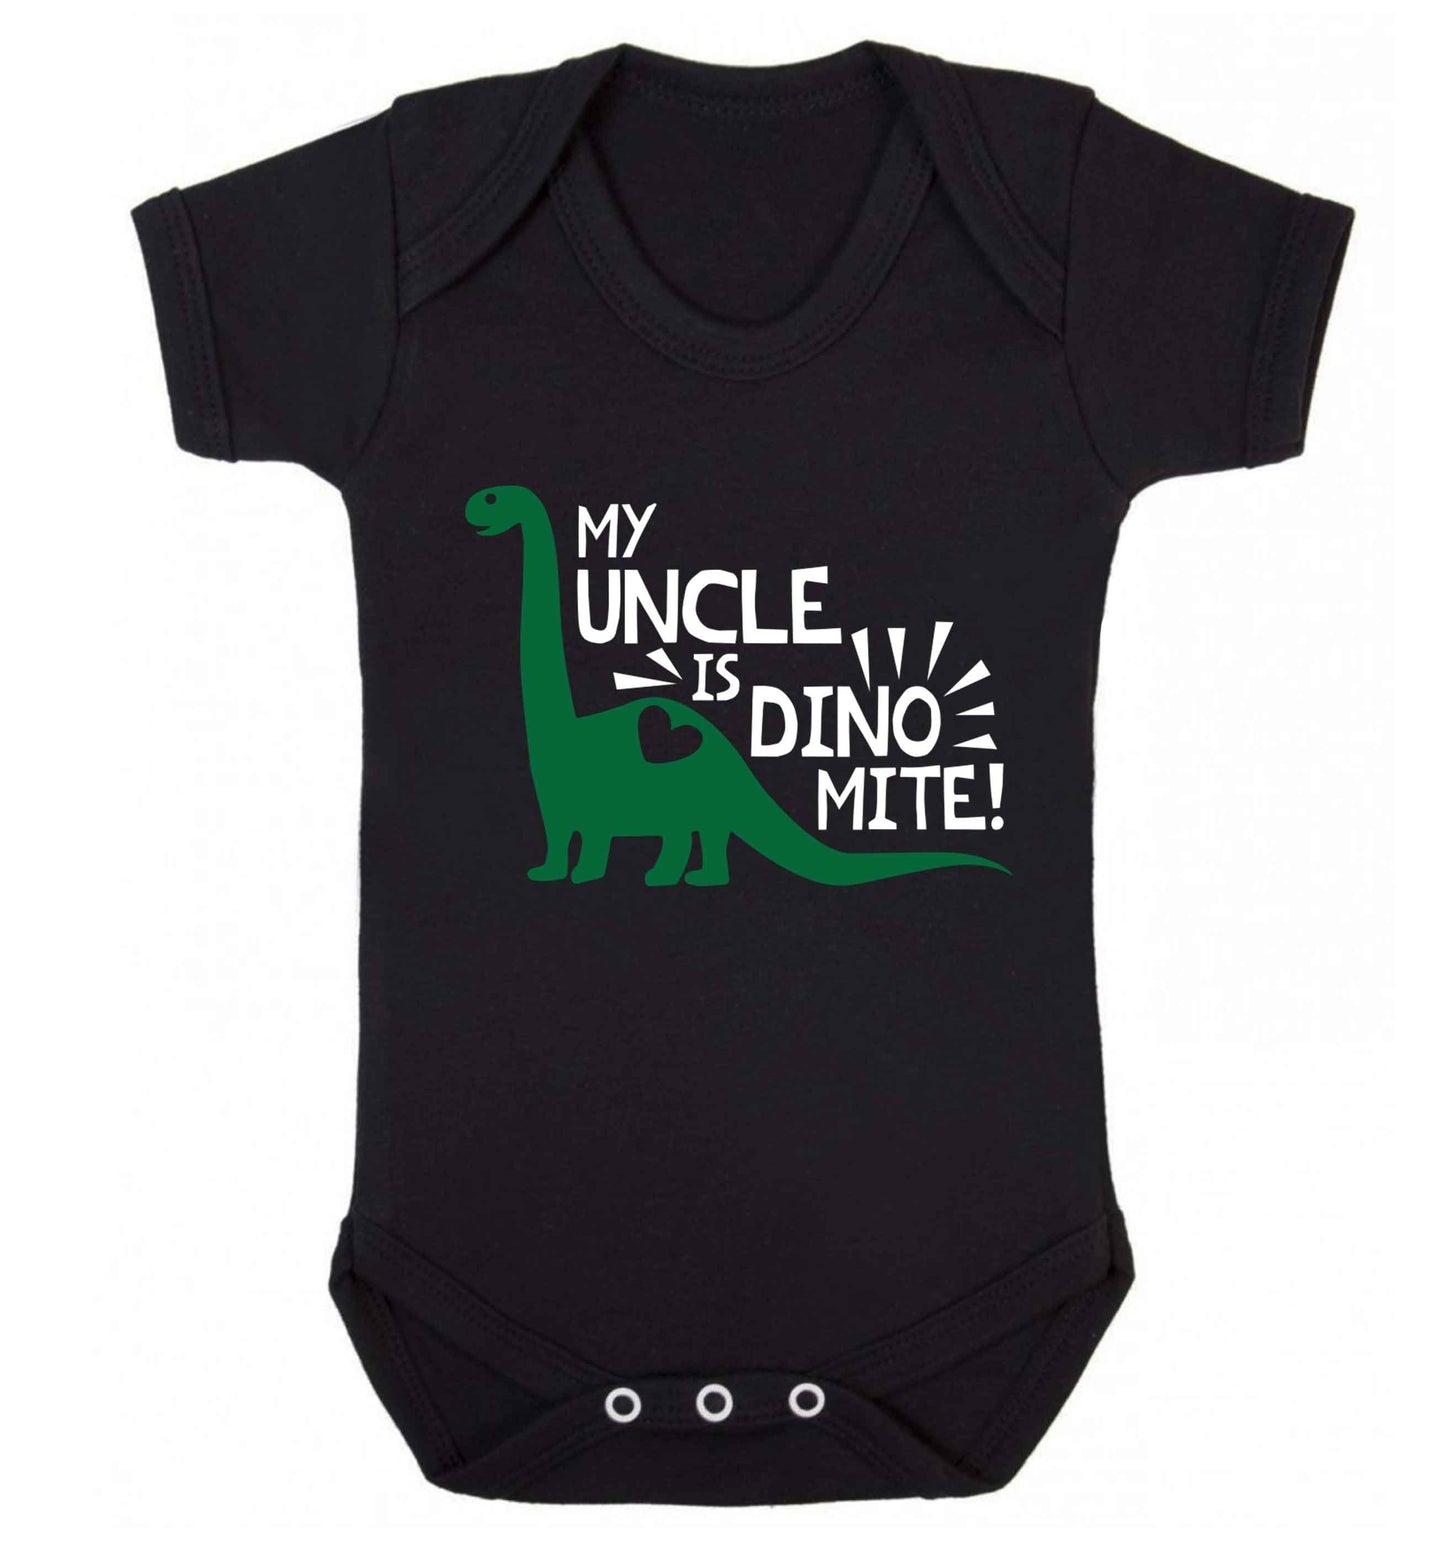 My uncle is dinomite! Baby Vest black 18-24 months